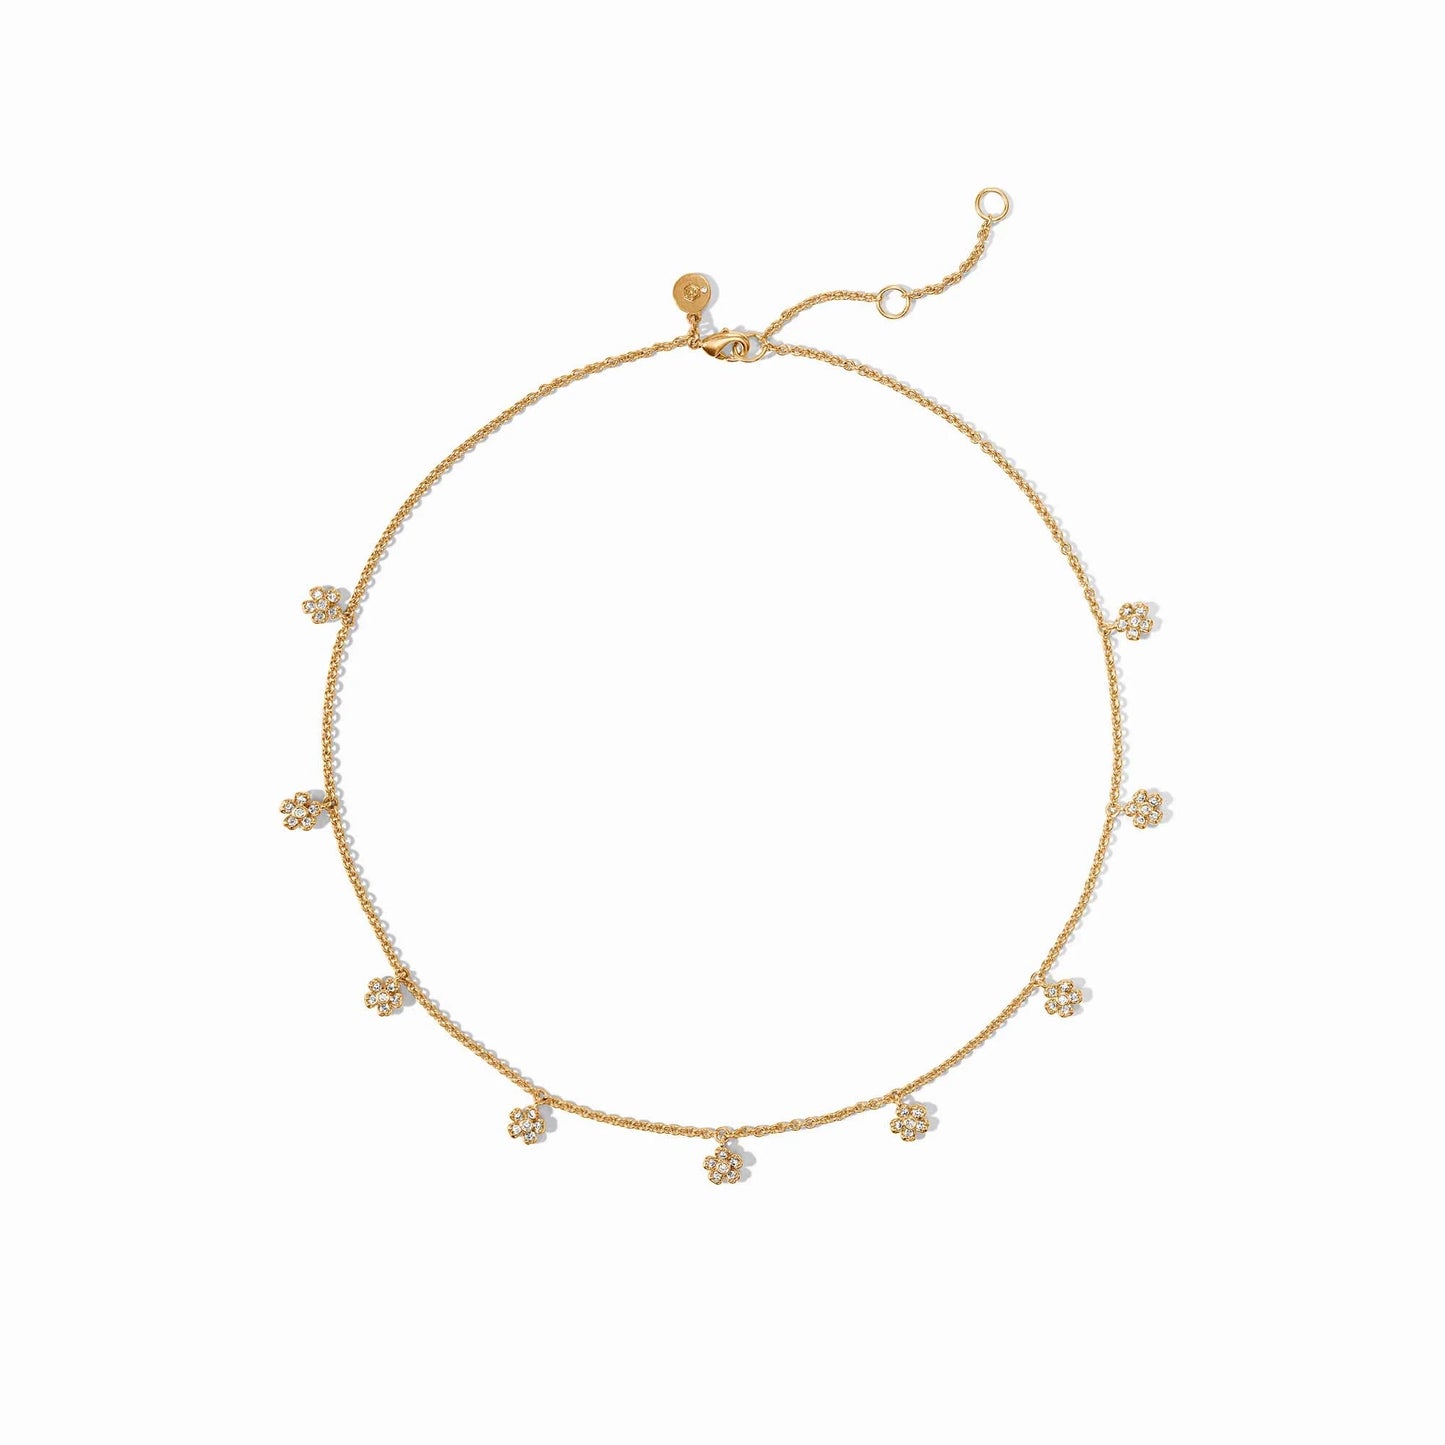 Julie Vos - Laurel Delicate Charm Necklace - Findlay Rowe Designs